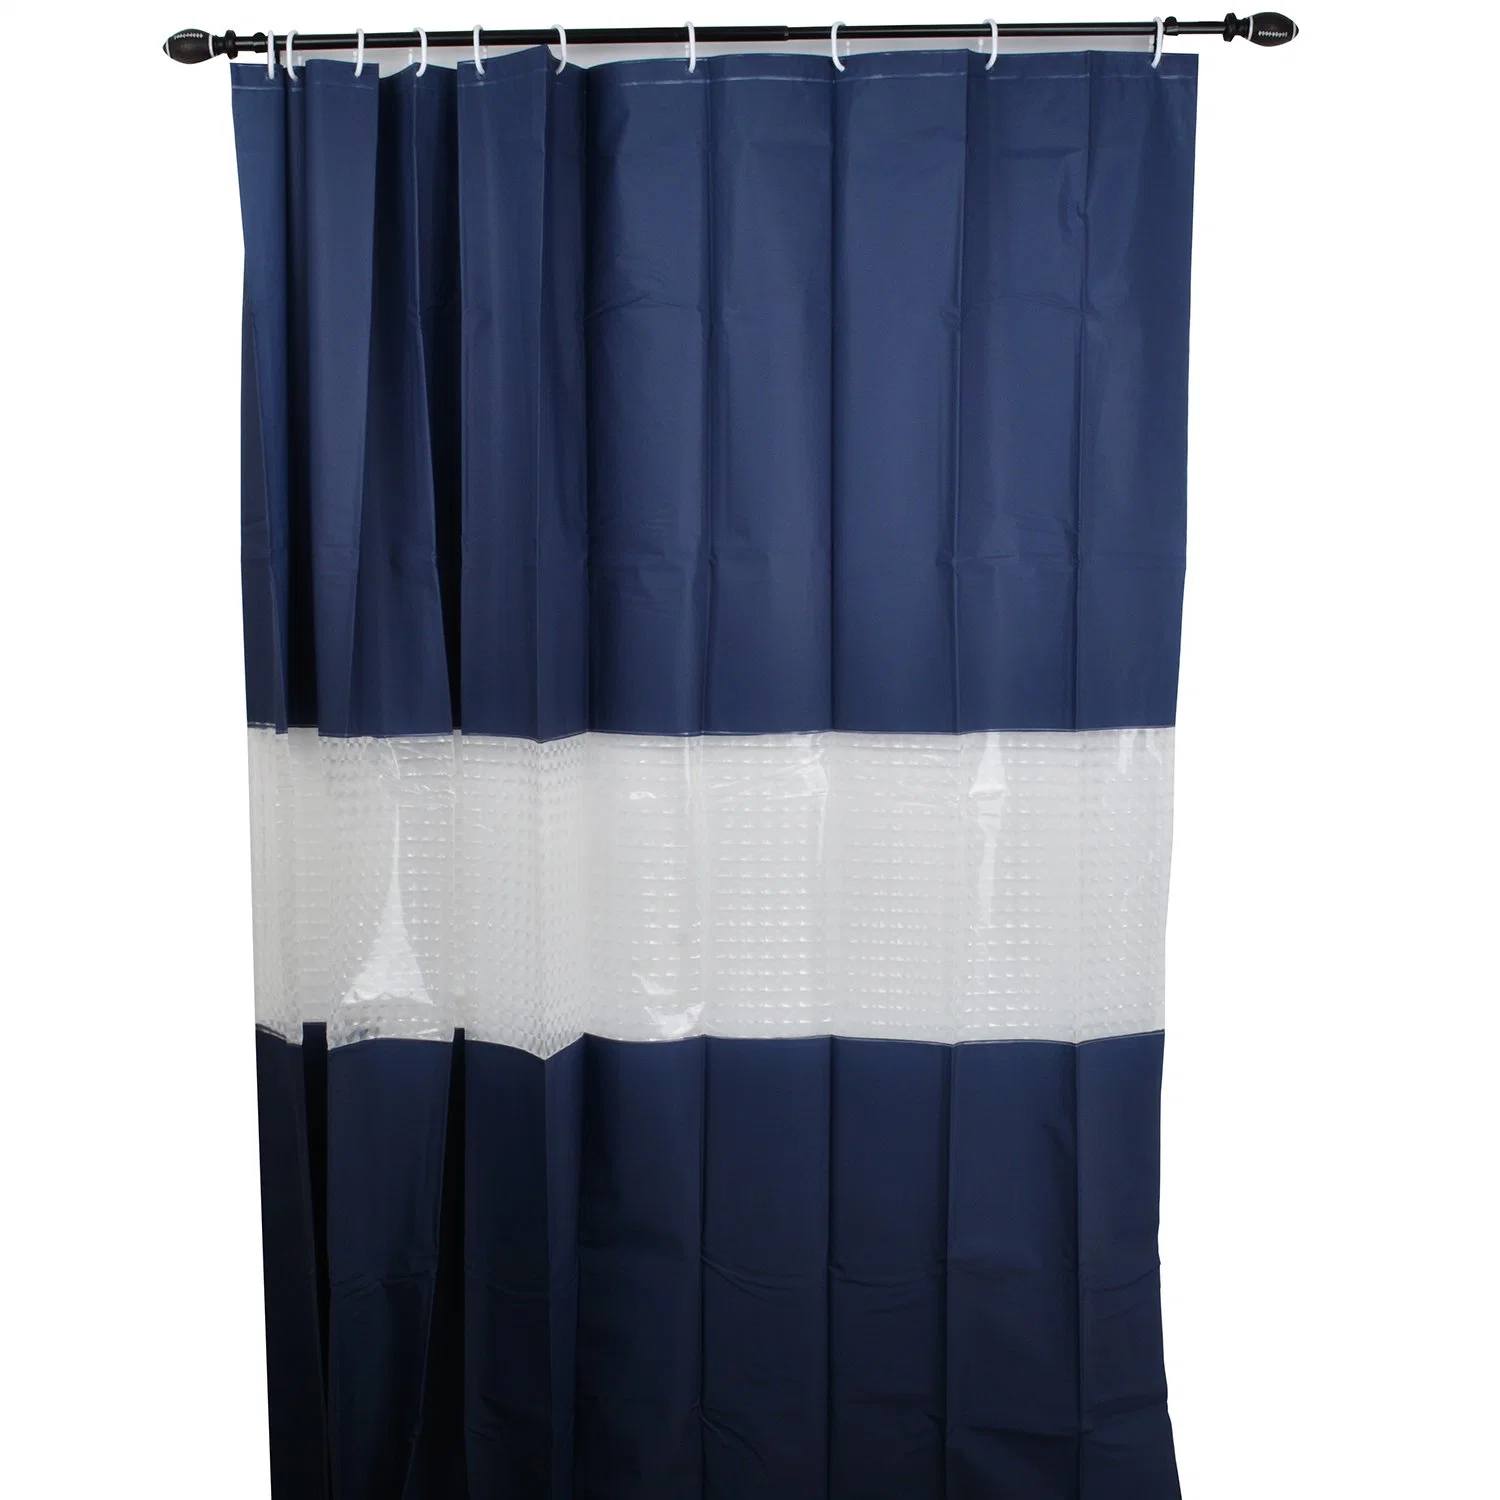 Waterproof Eco Friendly PEVA Shower Curtain